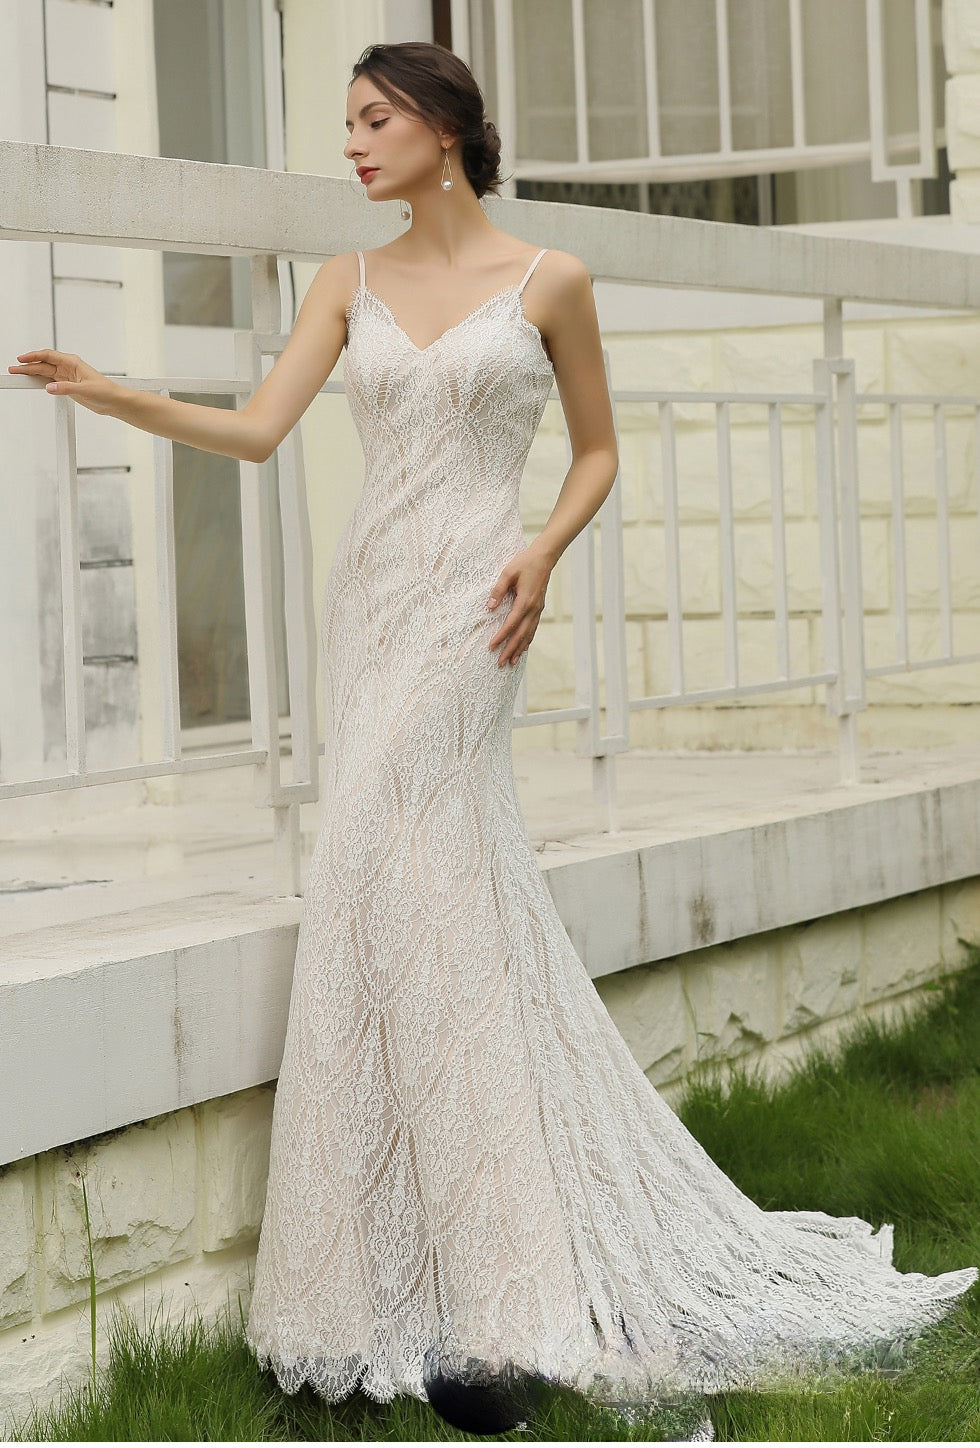 Breathtaking Bridal Dress with Spaghetti Straps Delicate Lace